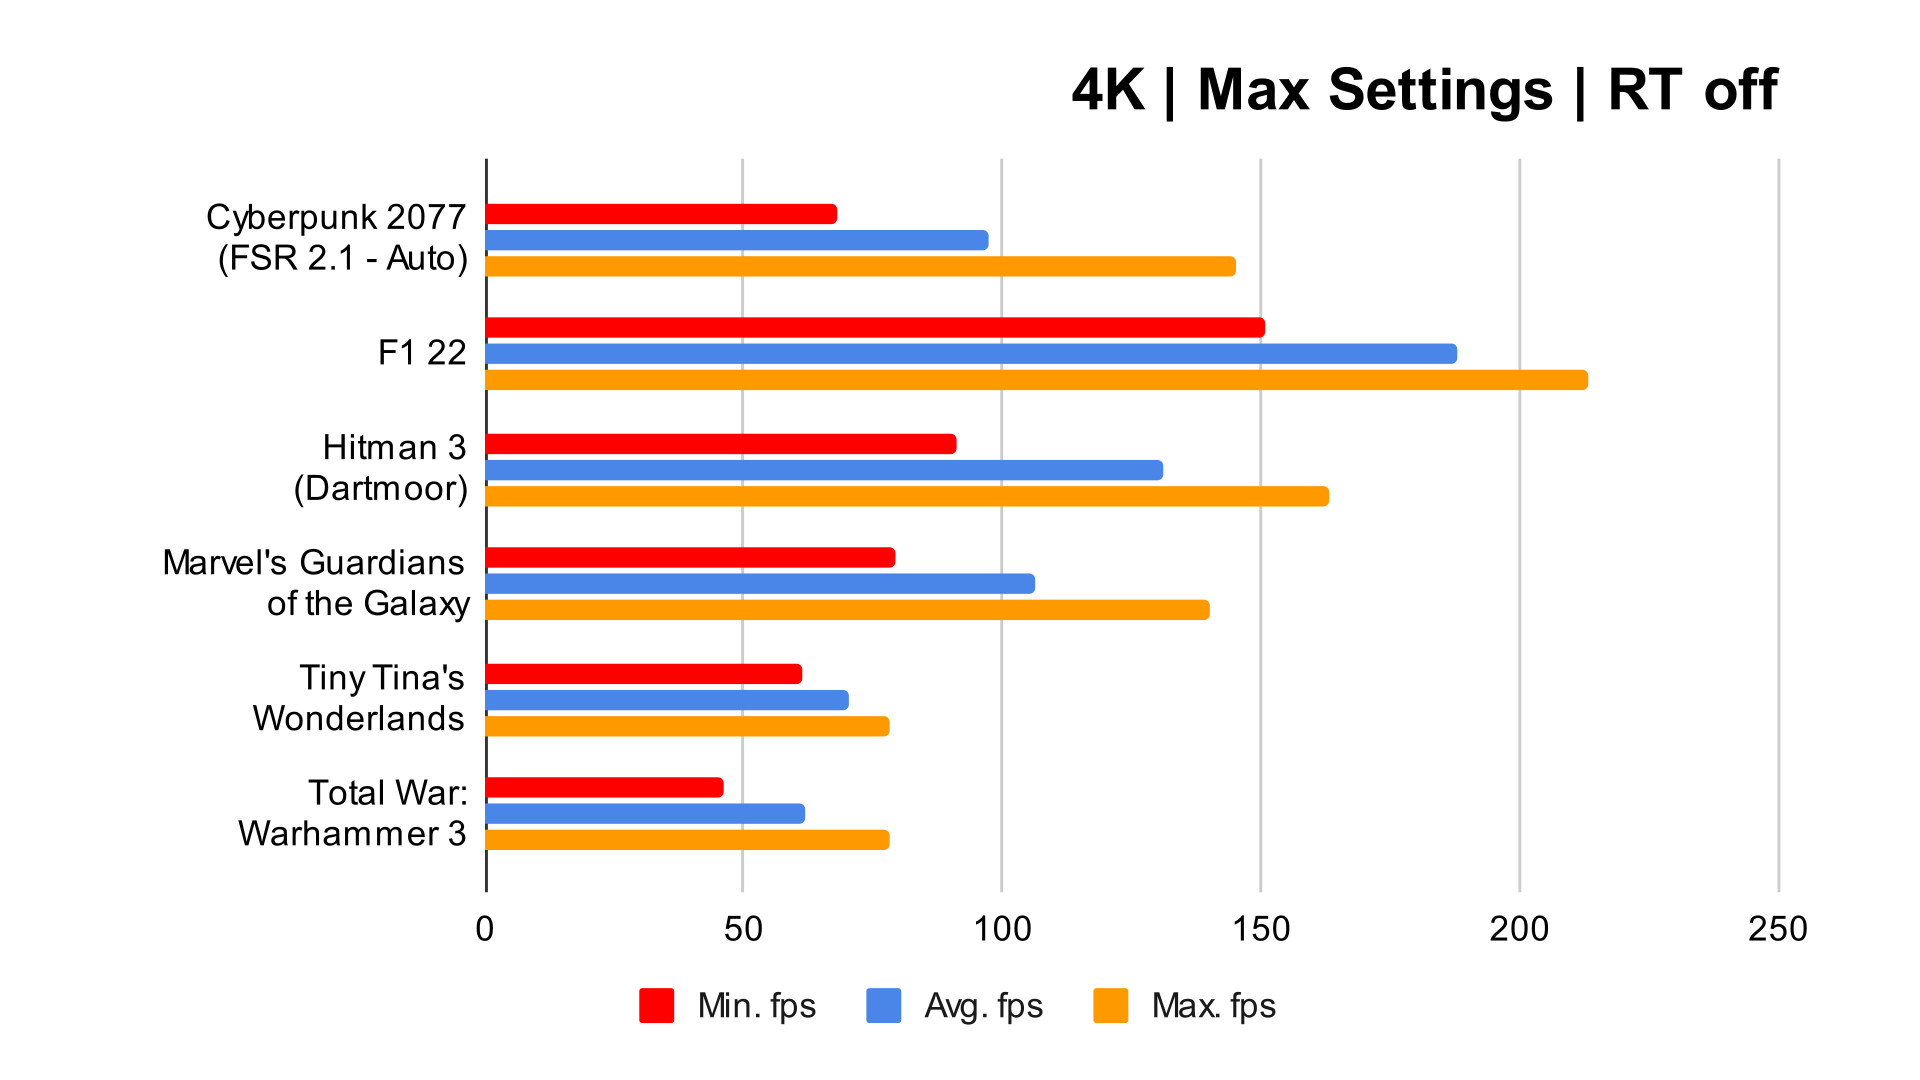 AMD Radeon RX 7900 XT review